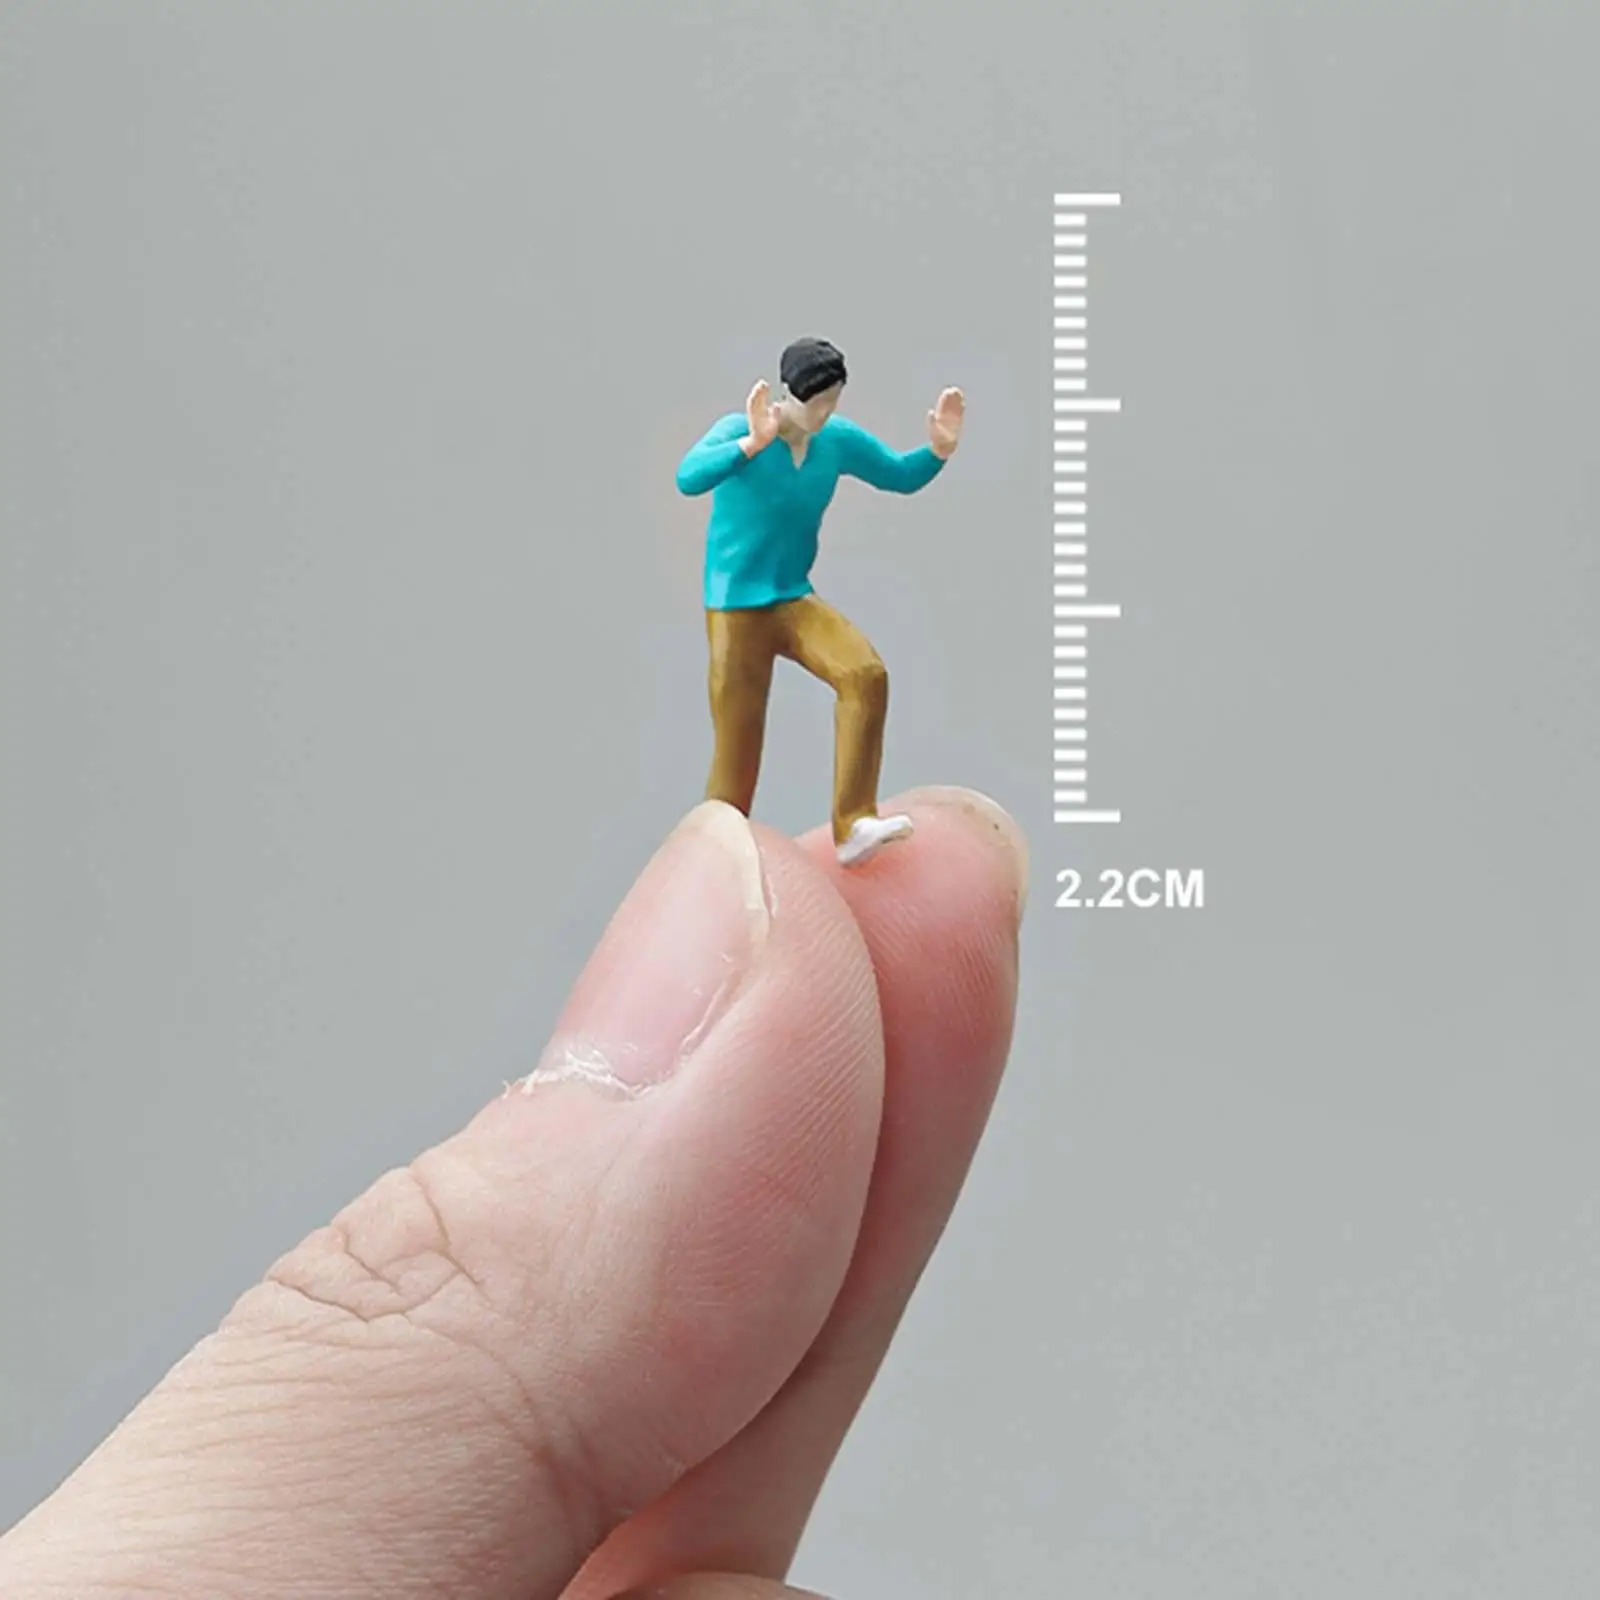 1/64 Miniature Model Figures 1/64 Boy Figures Miniature People Model DIY Layout Scenery Accs Resin Figures DIY Scene Decor